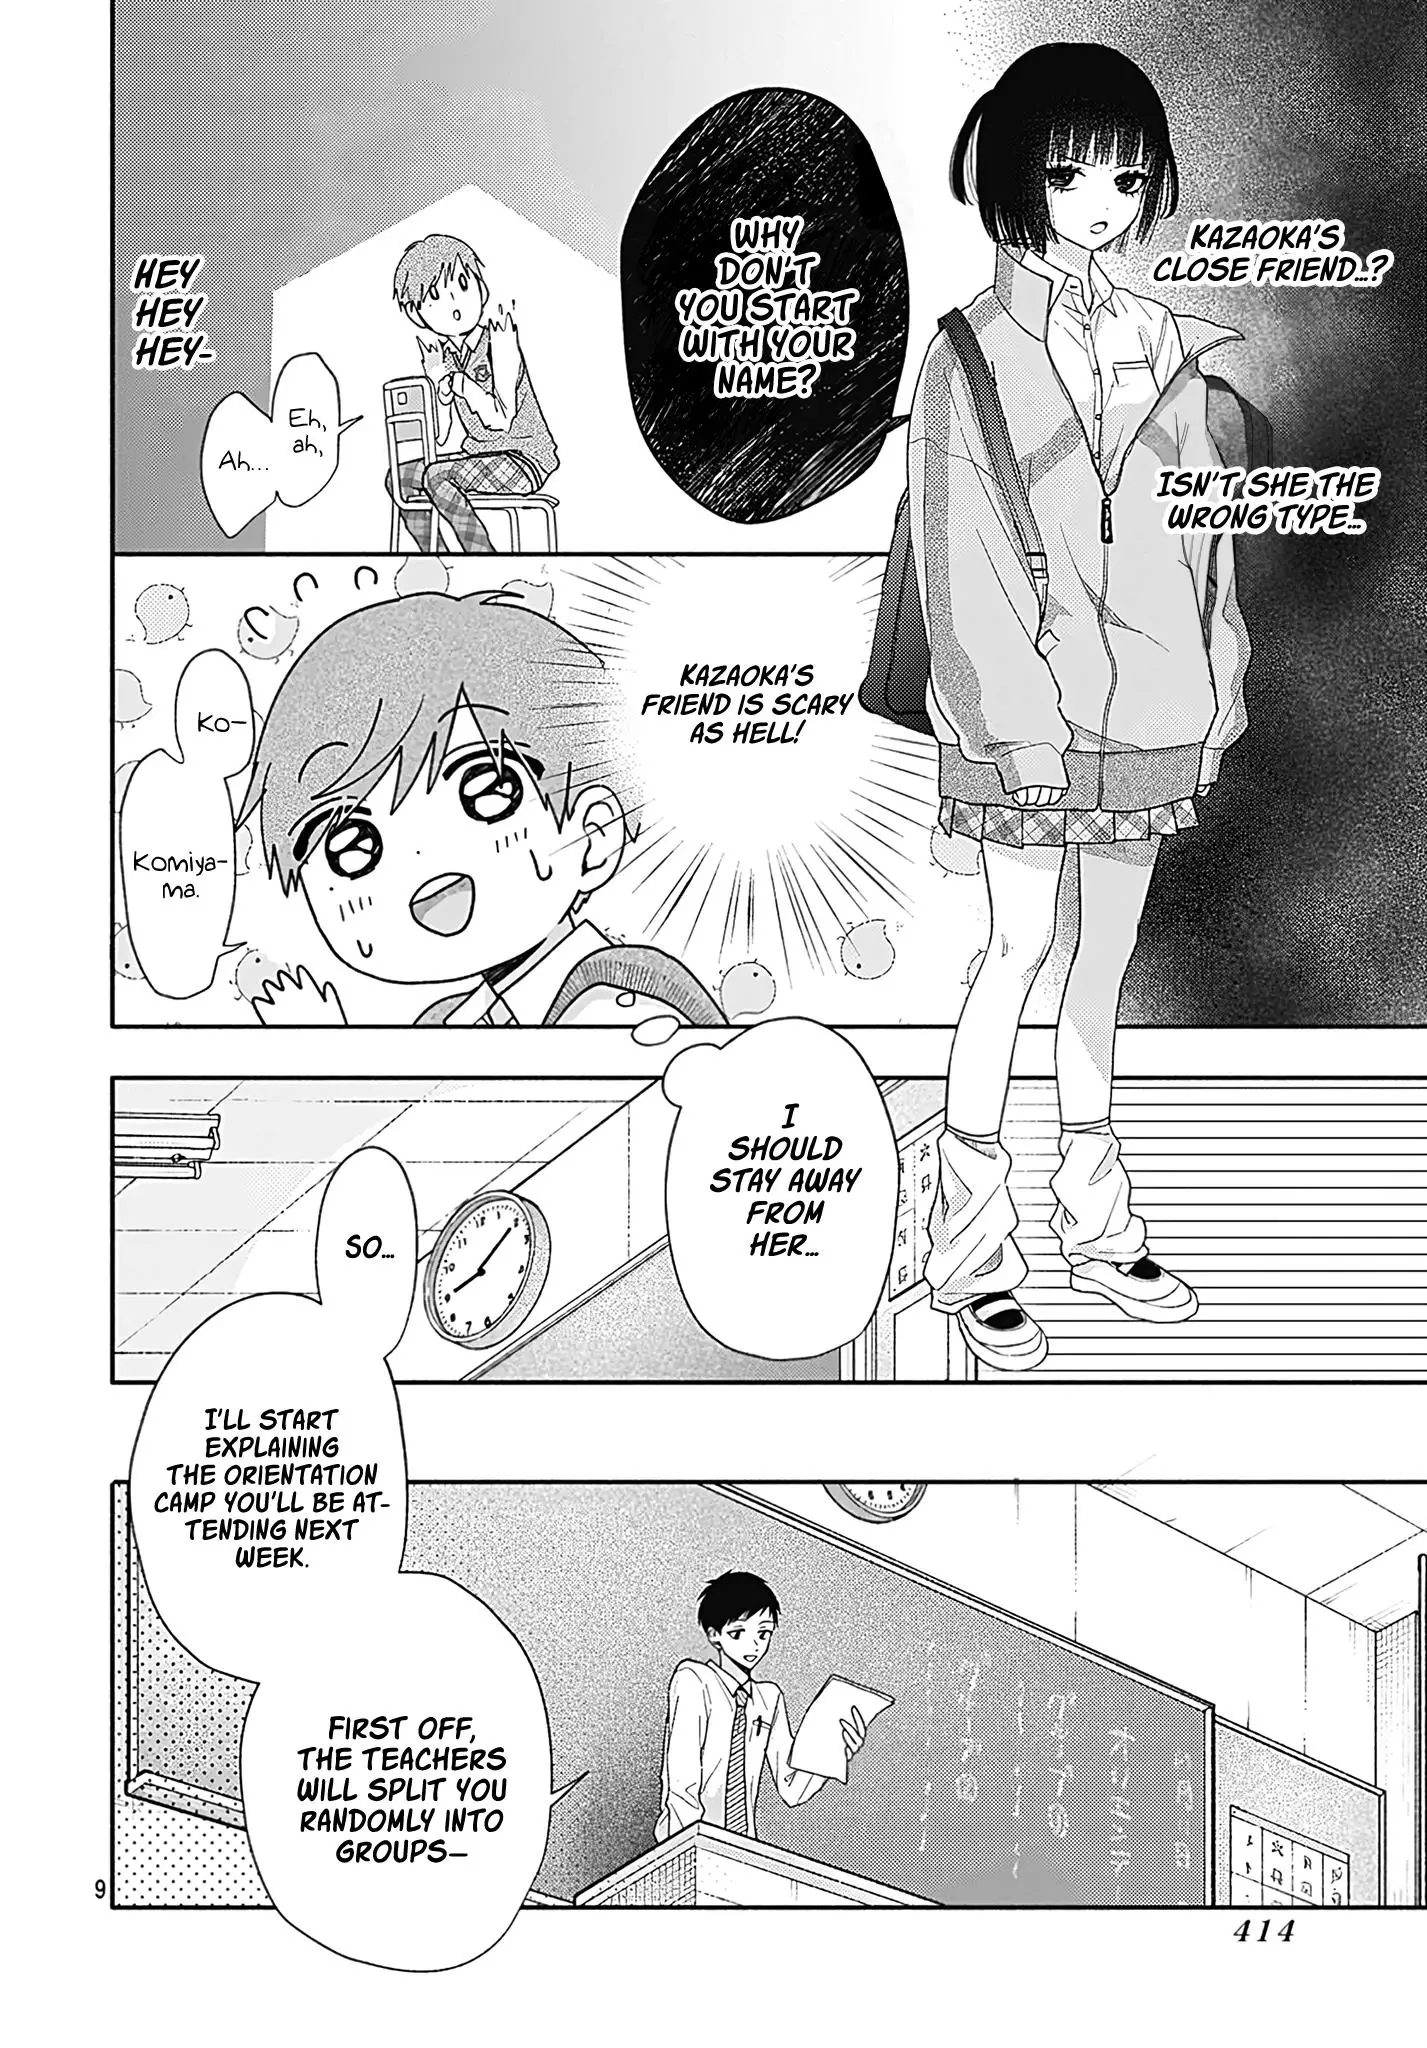 I Hate Komiyama - 3 page 9-f47c10fe